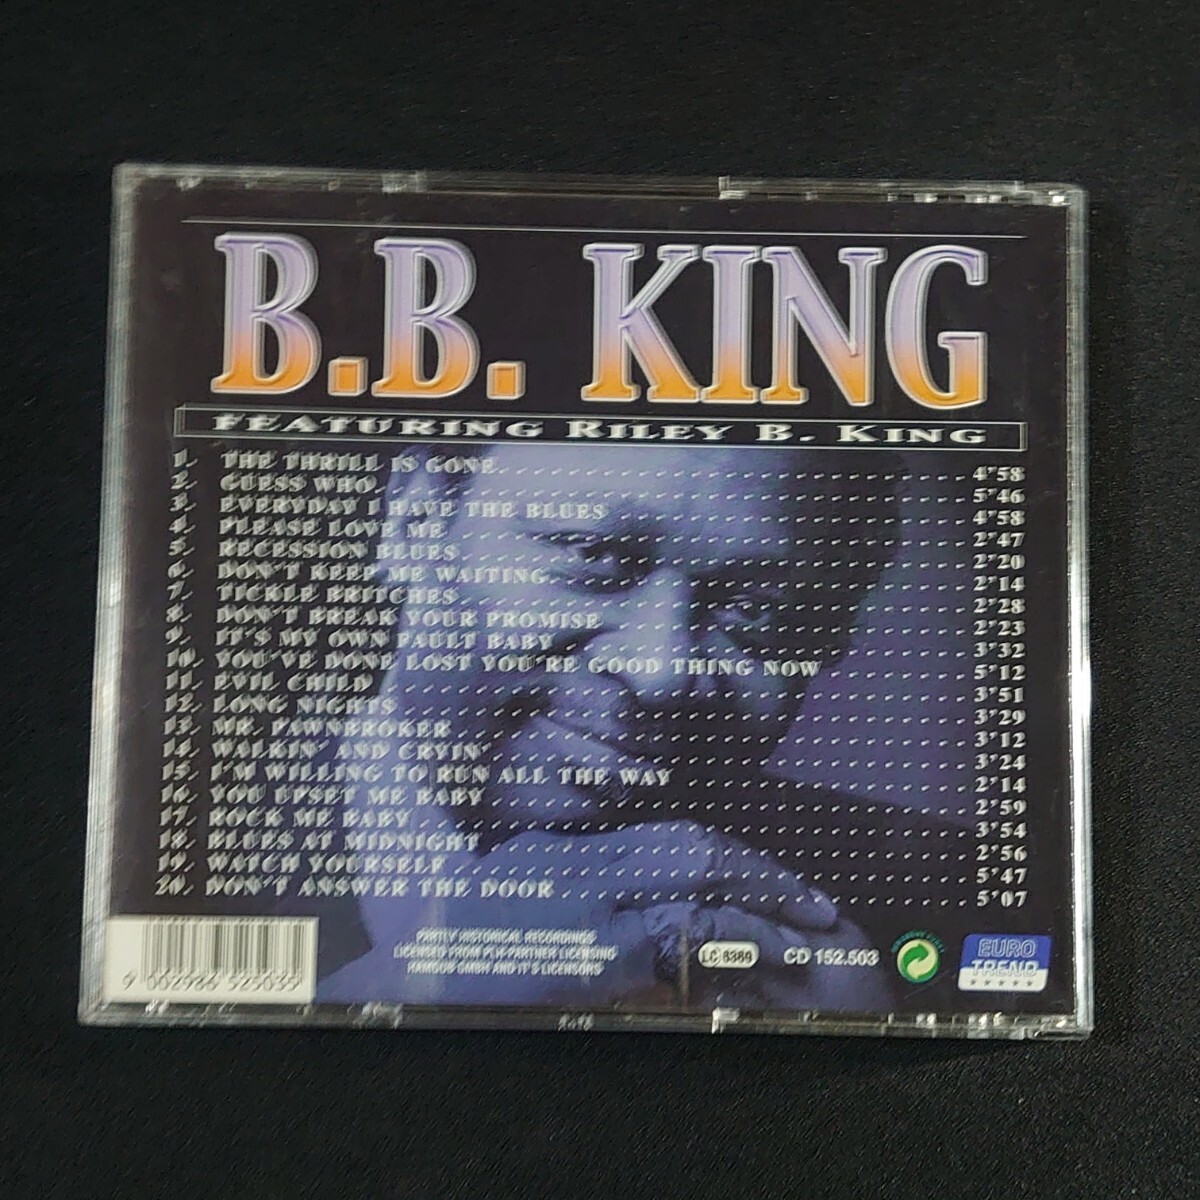 B.B.KING[FEATURING RILEY B. KING]B.B. King /CD/#YECD2296